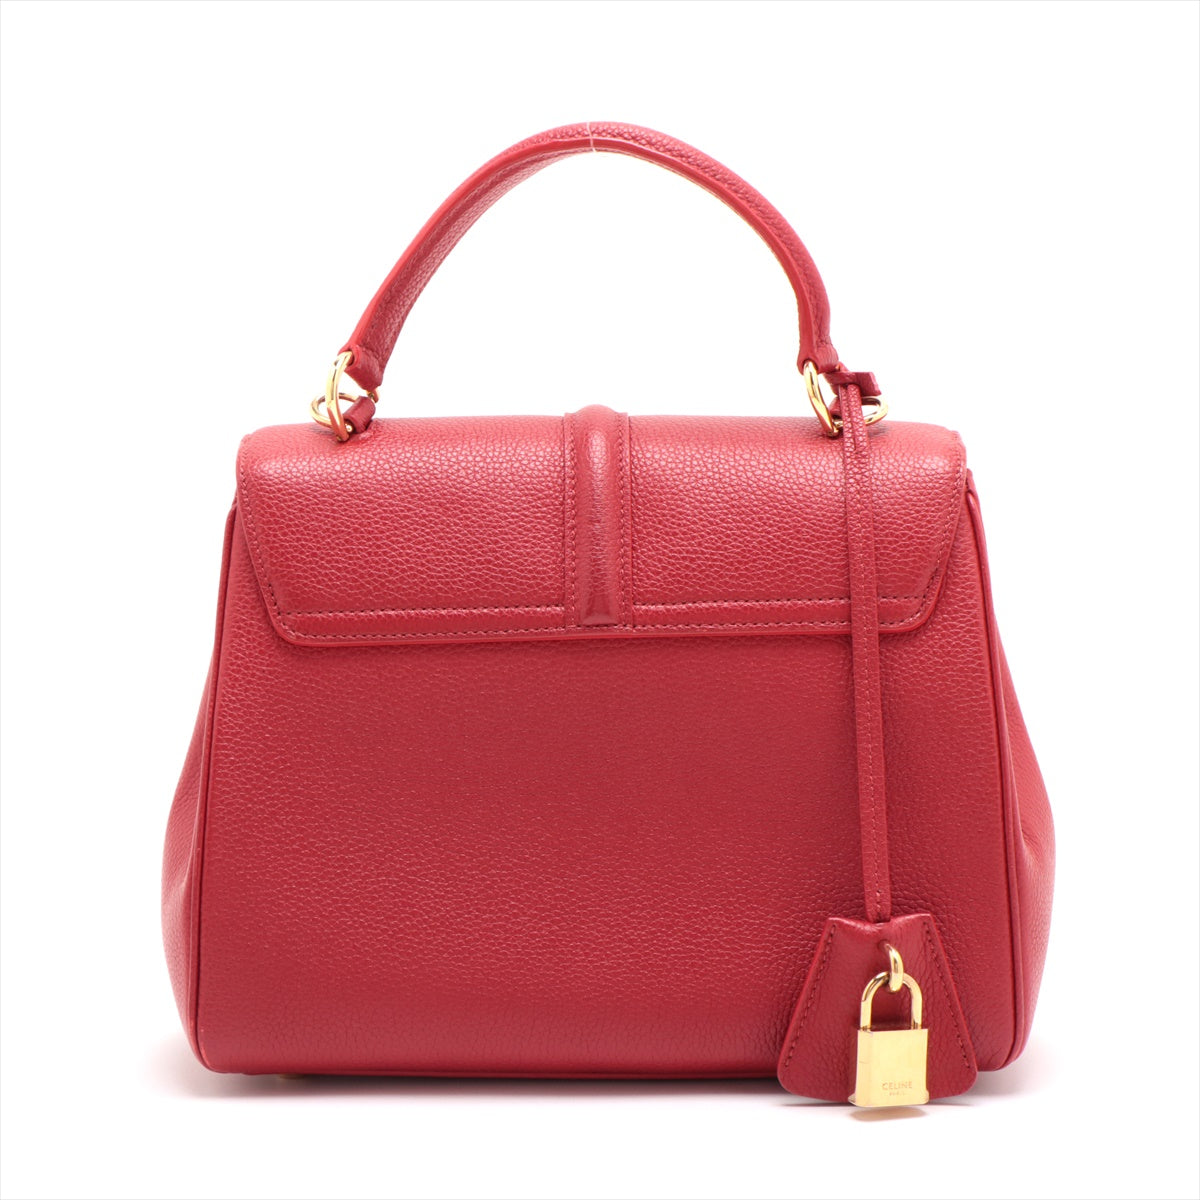 Celine 16 Ss Small Leather 2WAY Handbag Red